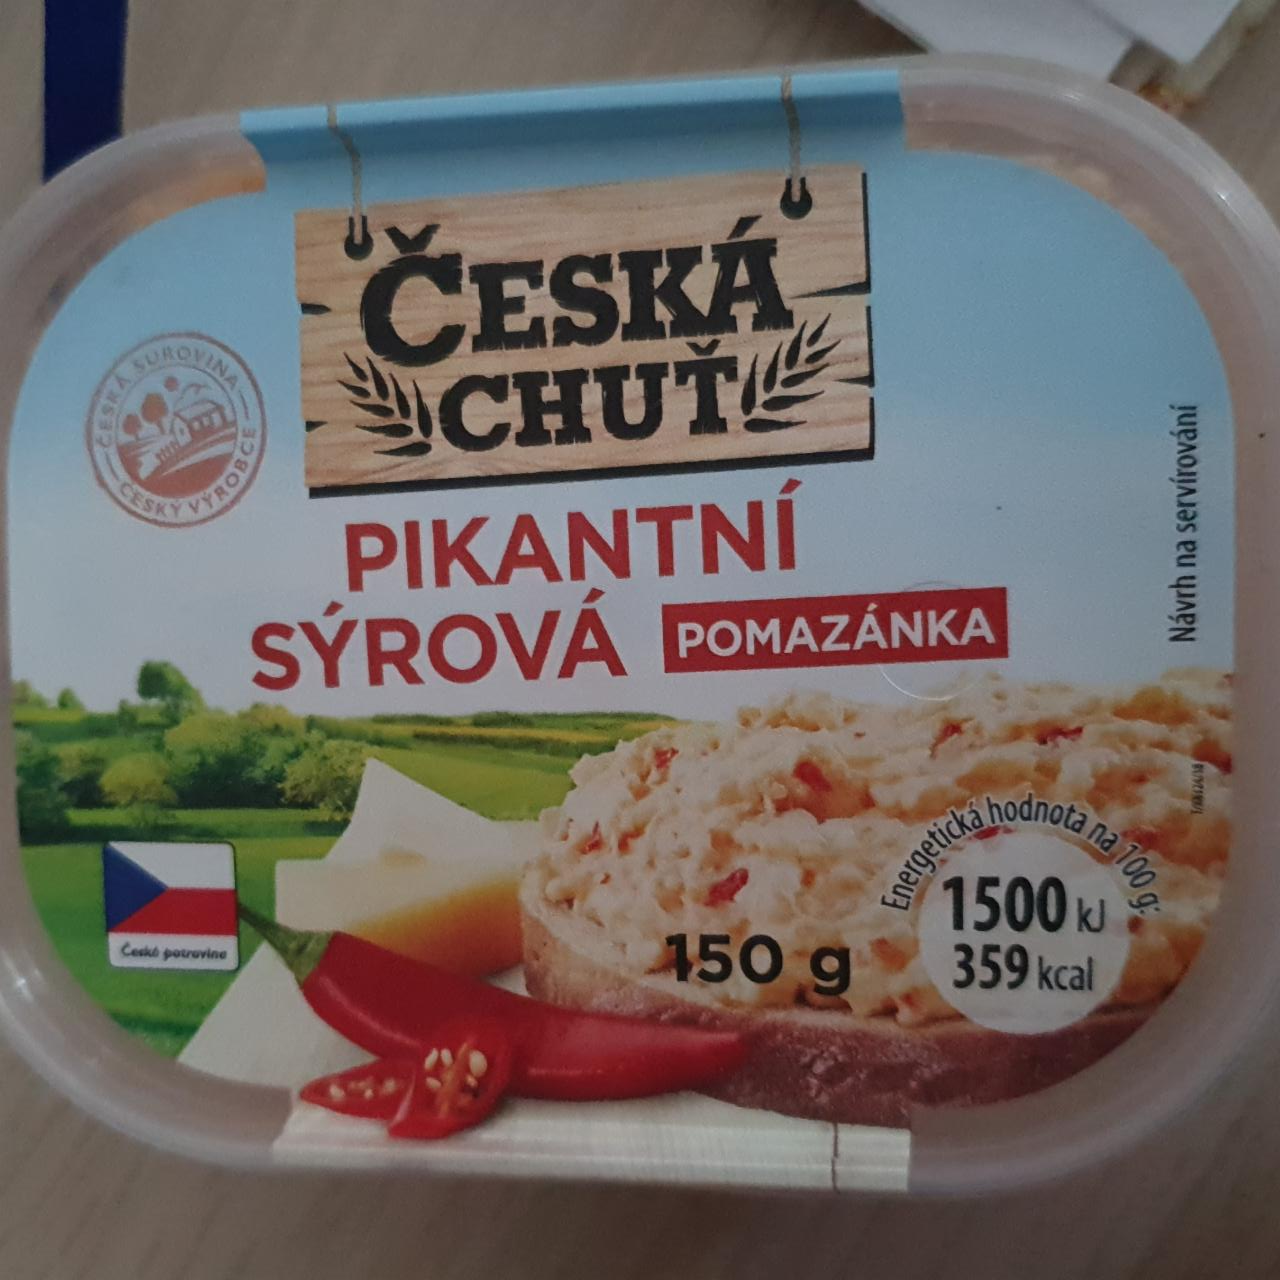 Фото - пикантная сырная помазка Česká chut